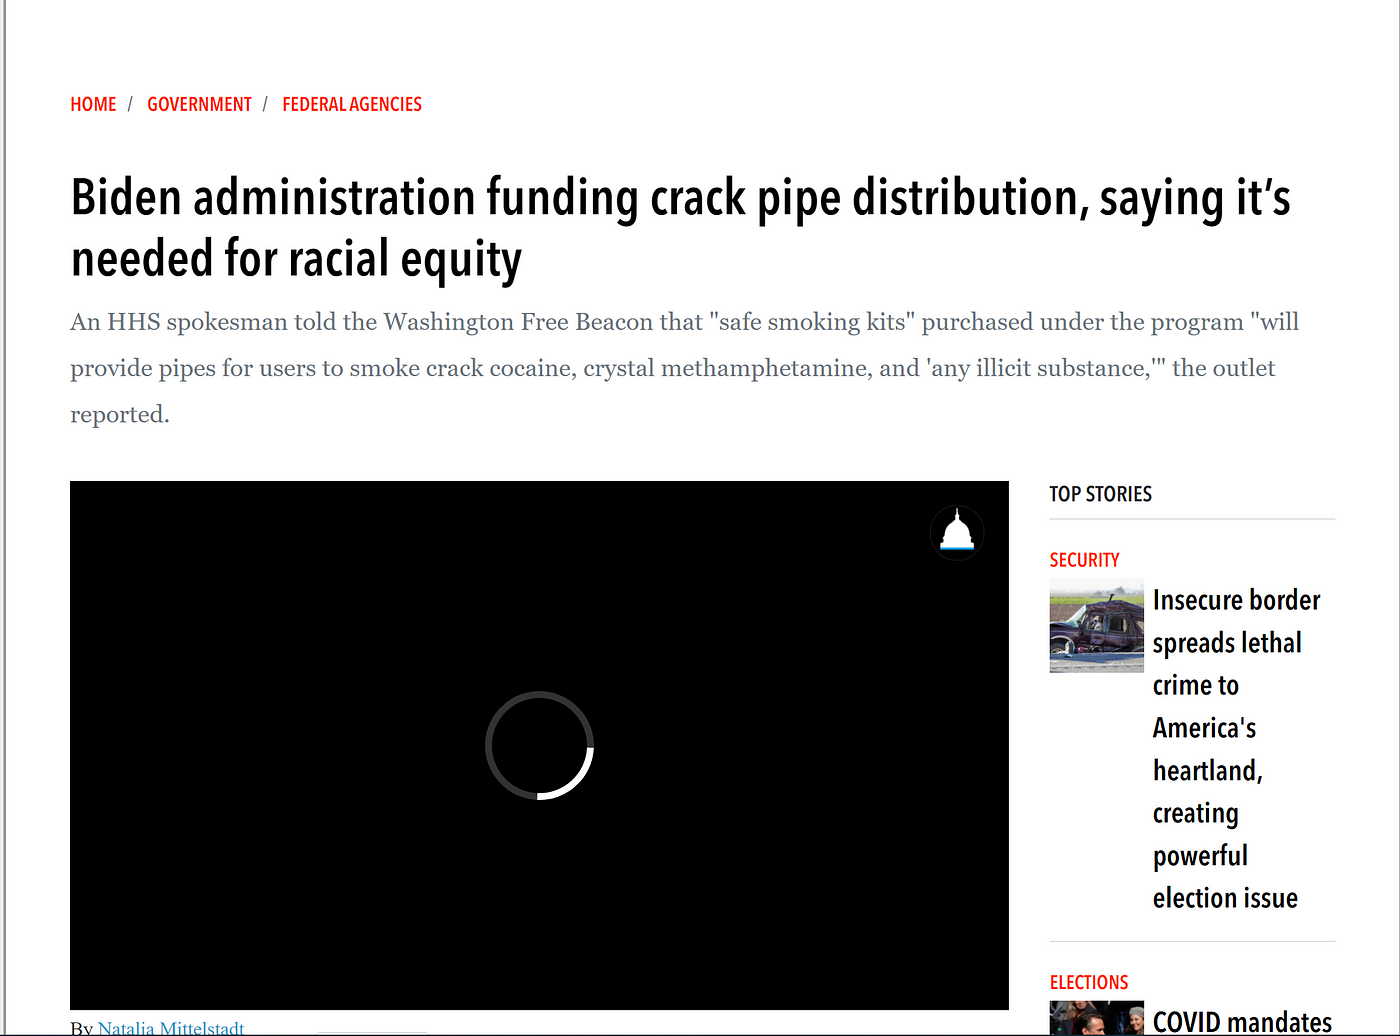 Biden administration funding crack pipe distribution?